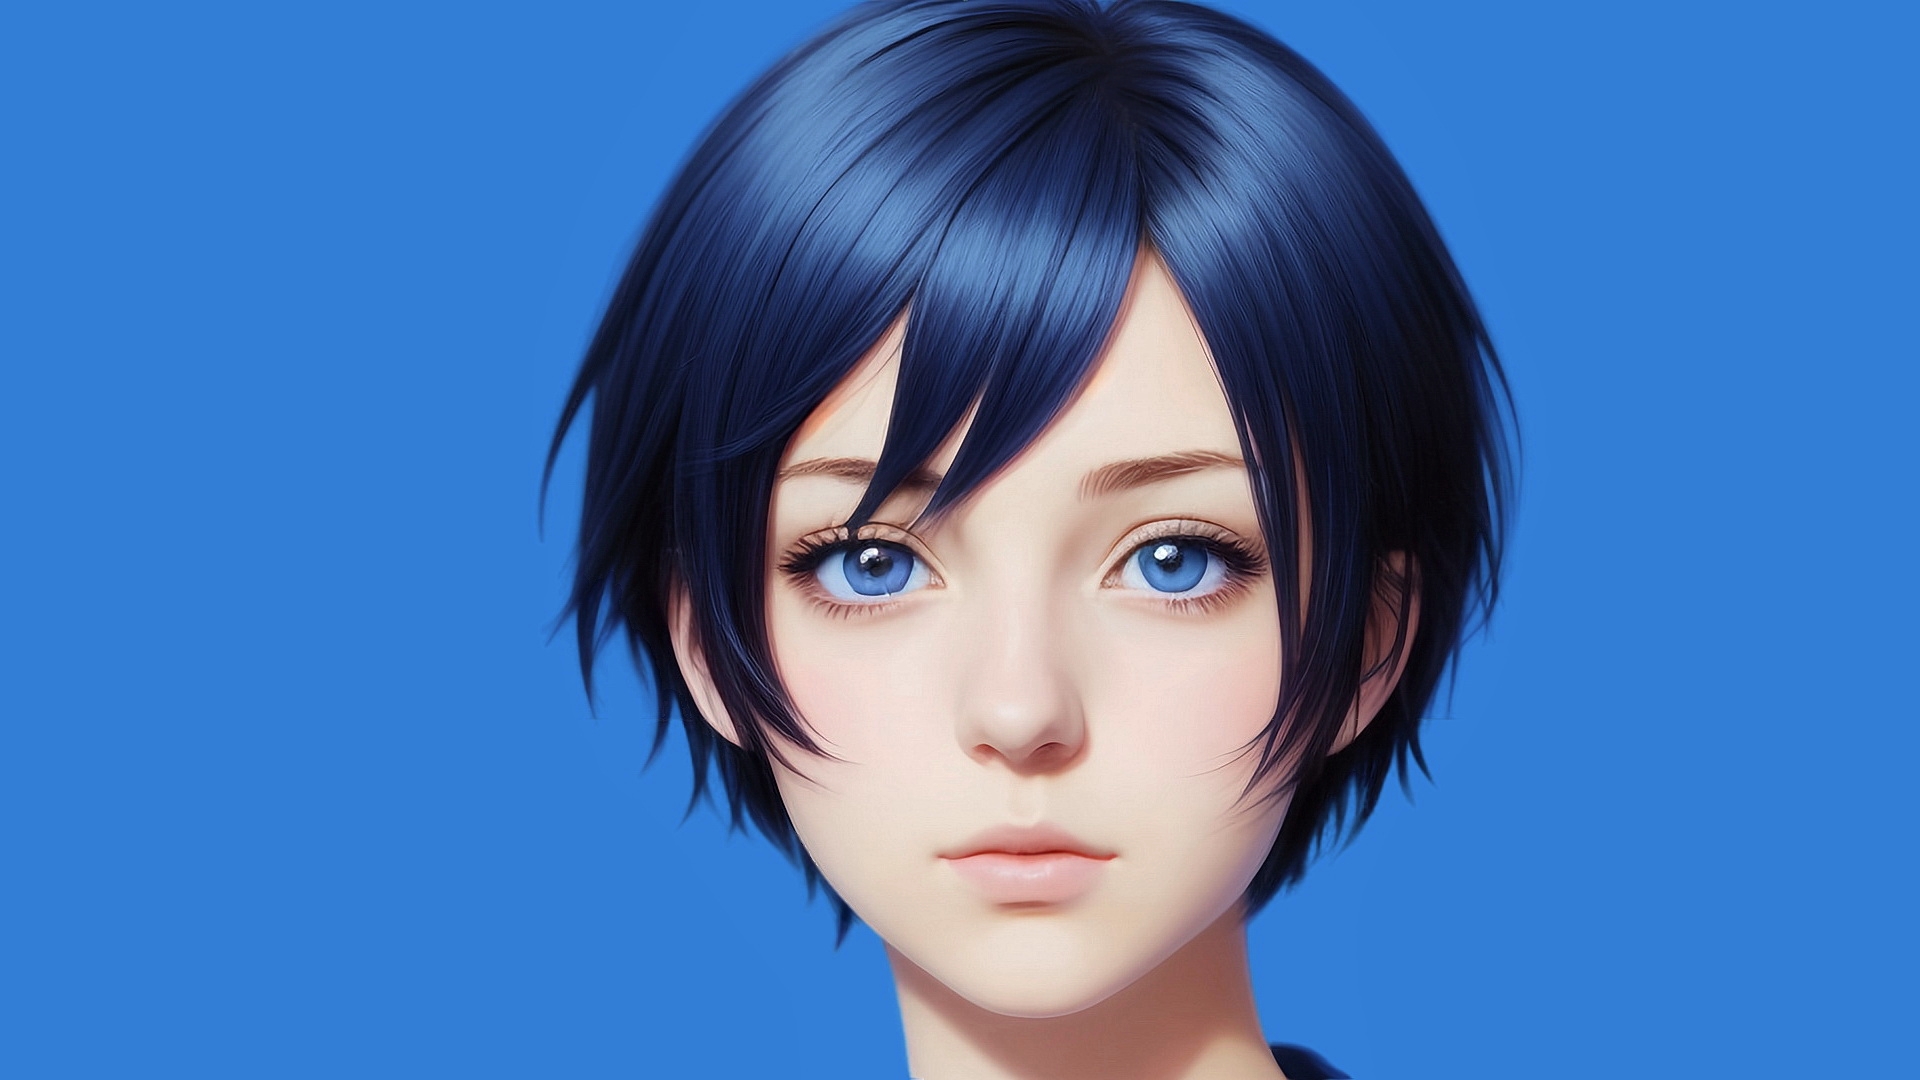 Бесплатное фото Портрет аниме девушки на голубом фоне